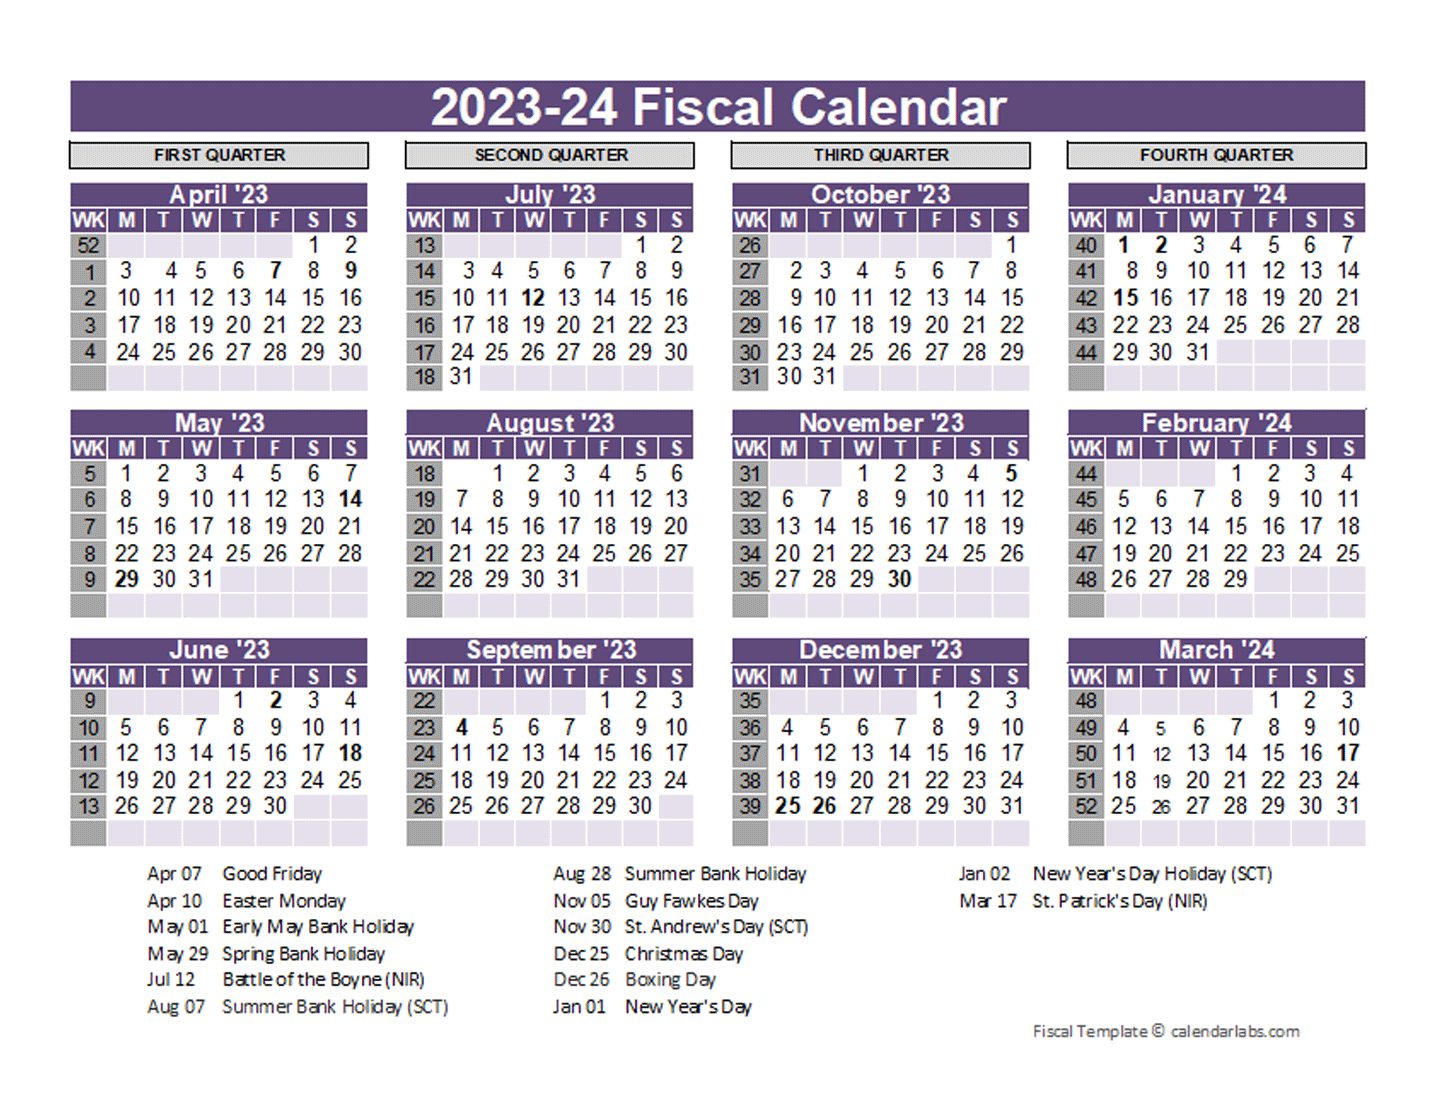 UK Fiscal Calendar Template 2023-2024 - Free Printable Templates